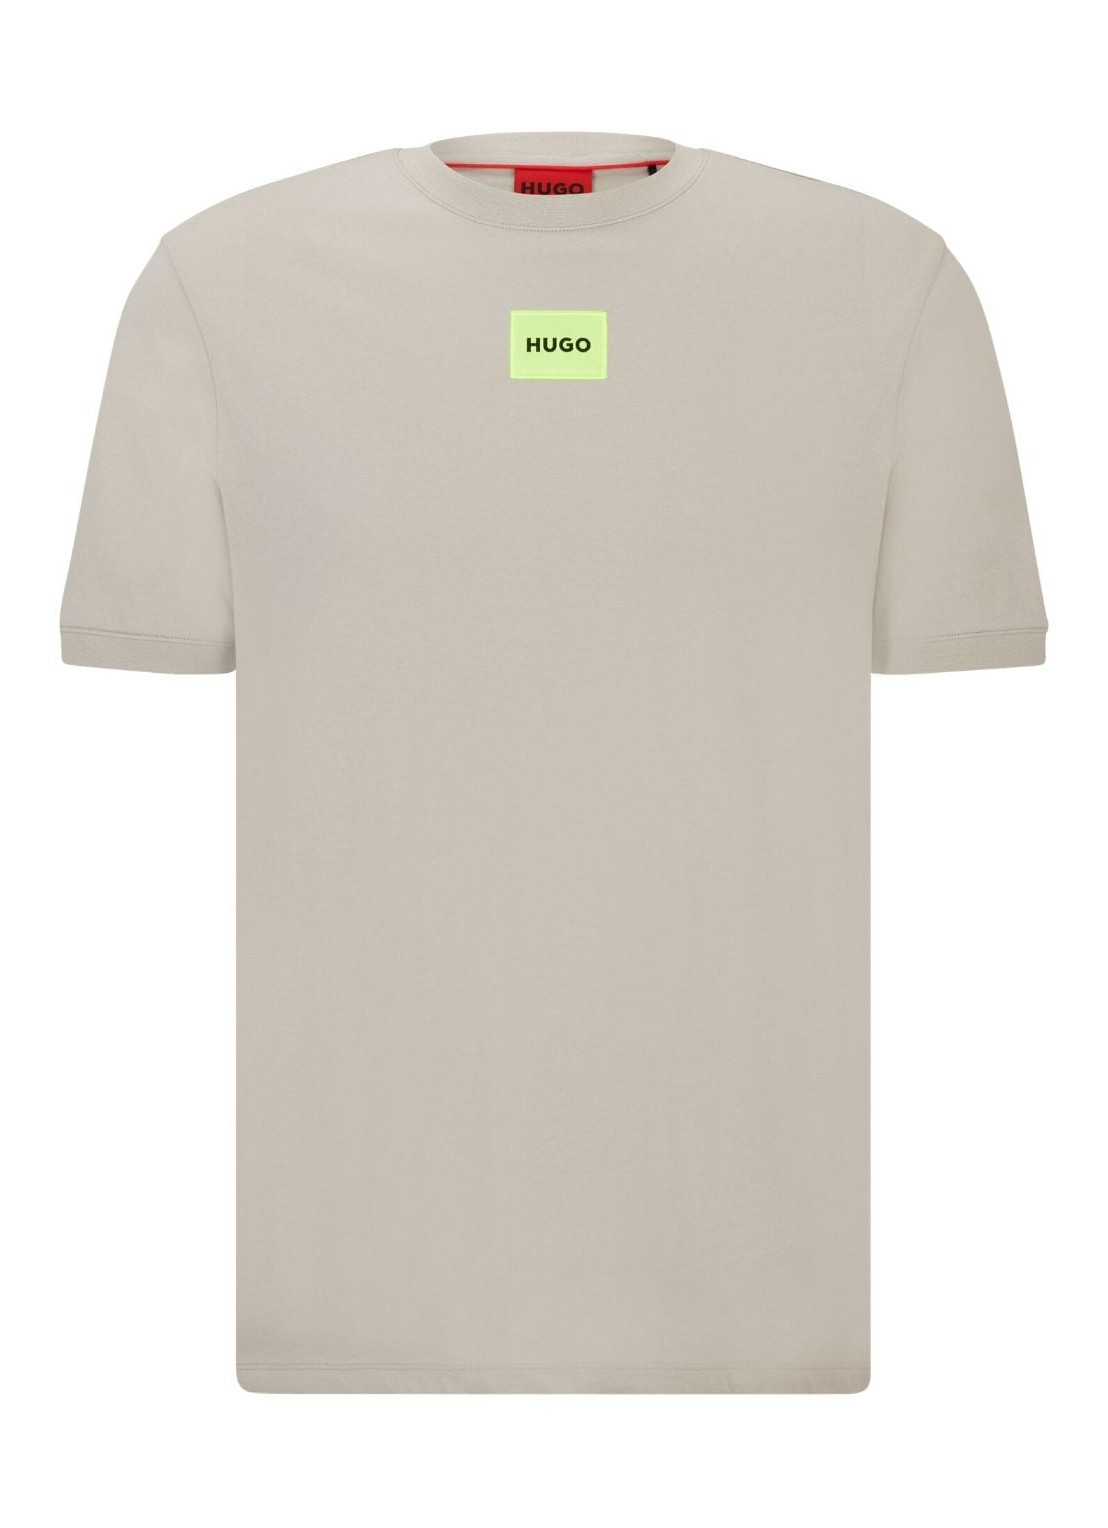 Camiseta hugo t-shirt man diragolino212 50447978 055 talla gris
 